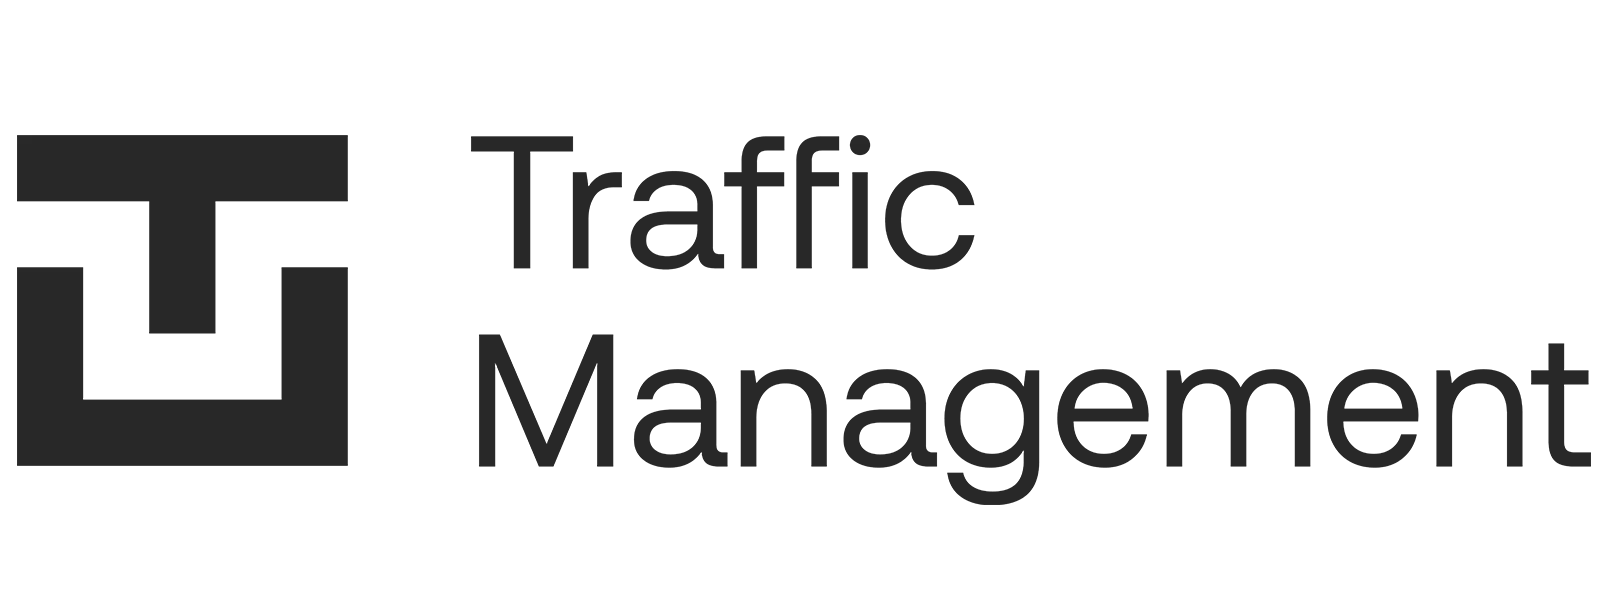 https://freedomworks.co.nz/traffic-management/